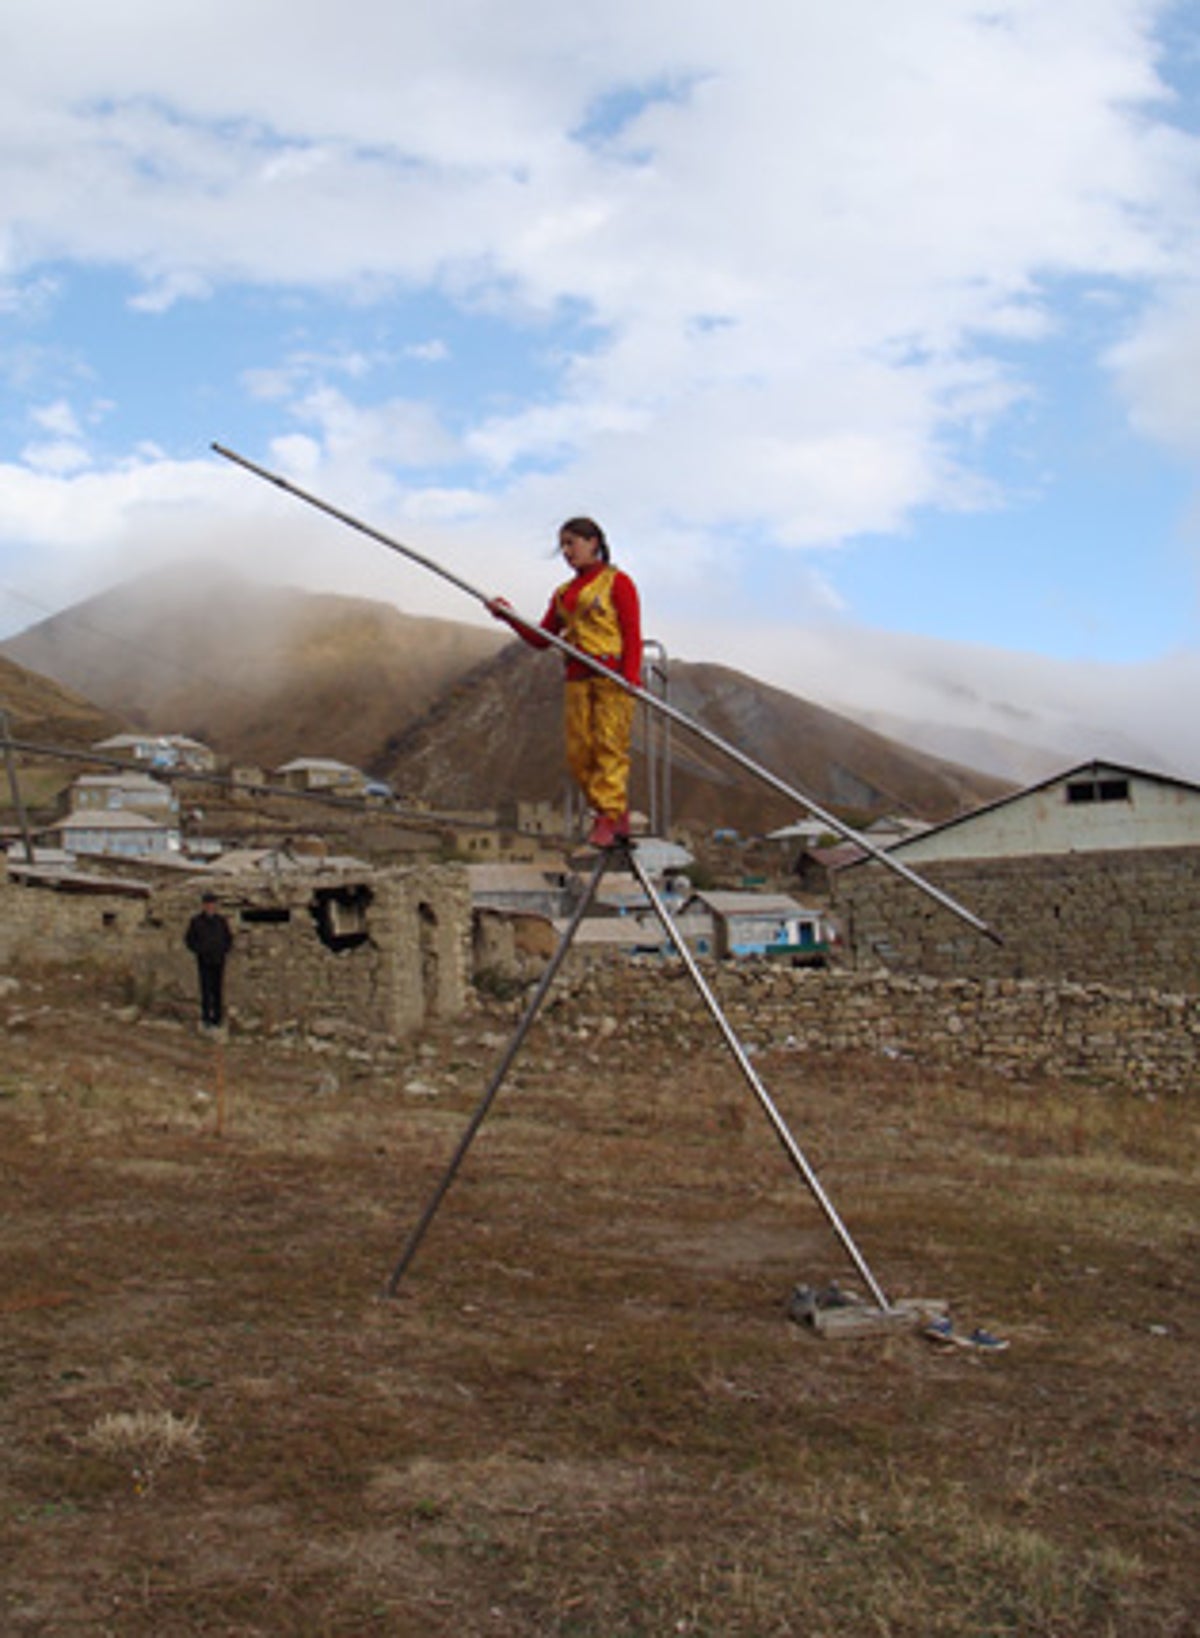 Walking a livelihood tightrope – literally